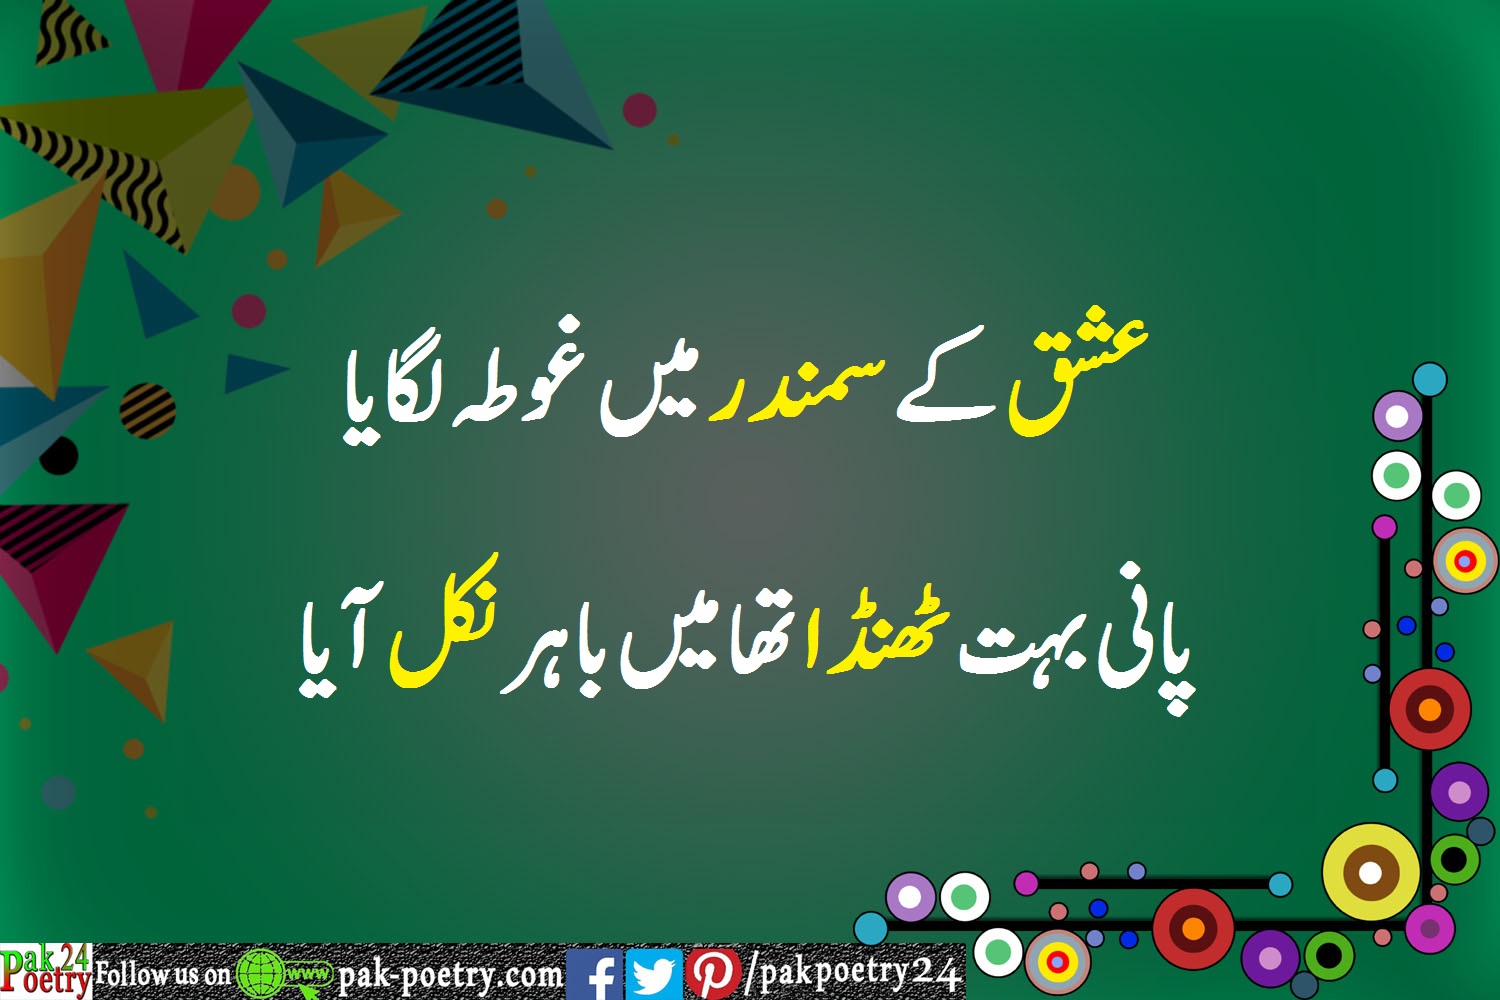 Urdu Funny Poetry - Top 5 Collection - Pak Poetry 24